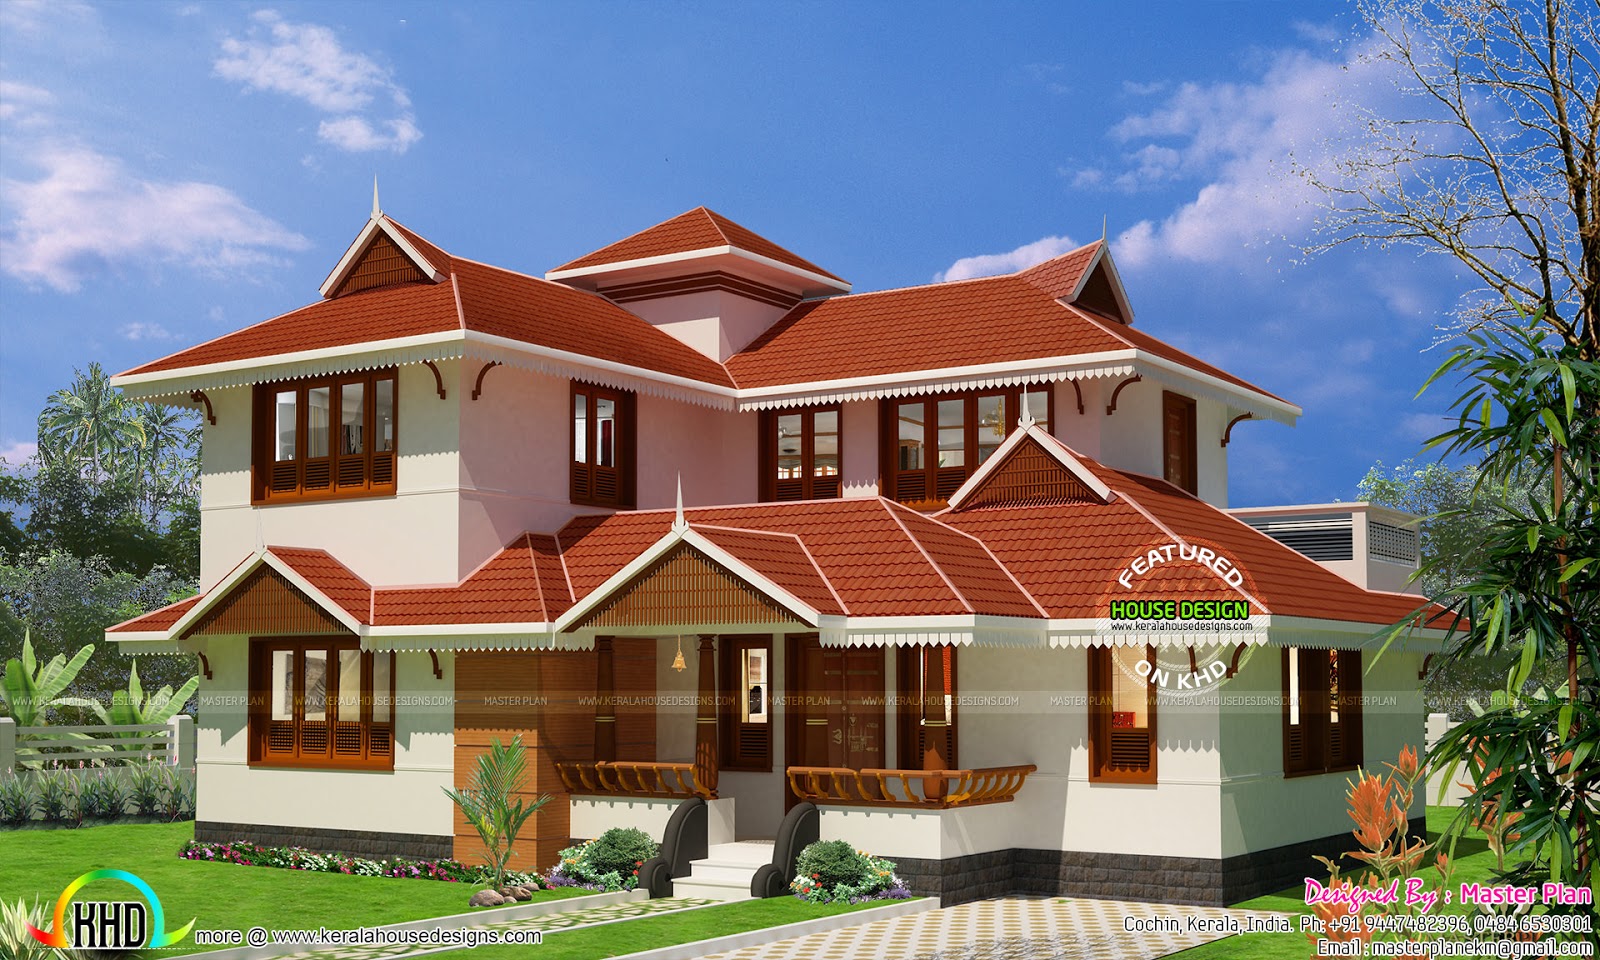 Kerala traditional home at Bengaluru Kerala home design 